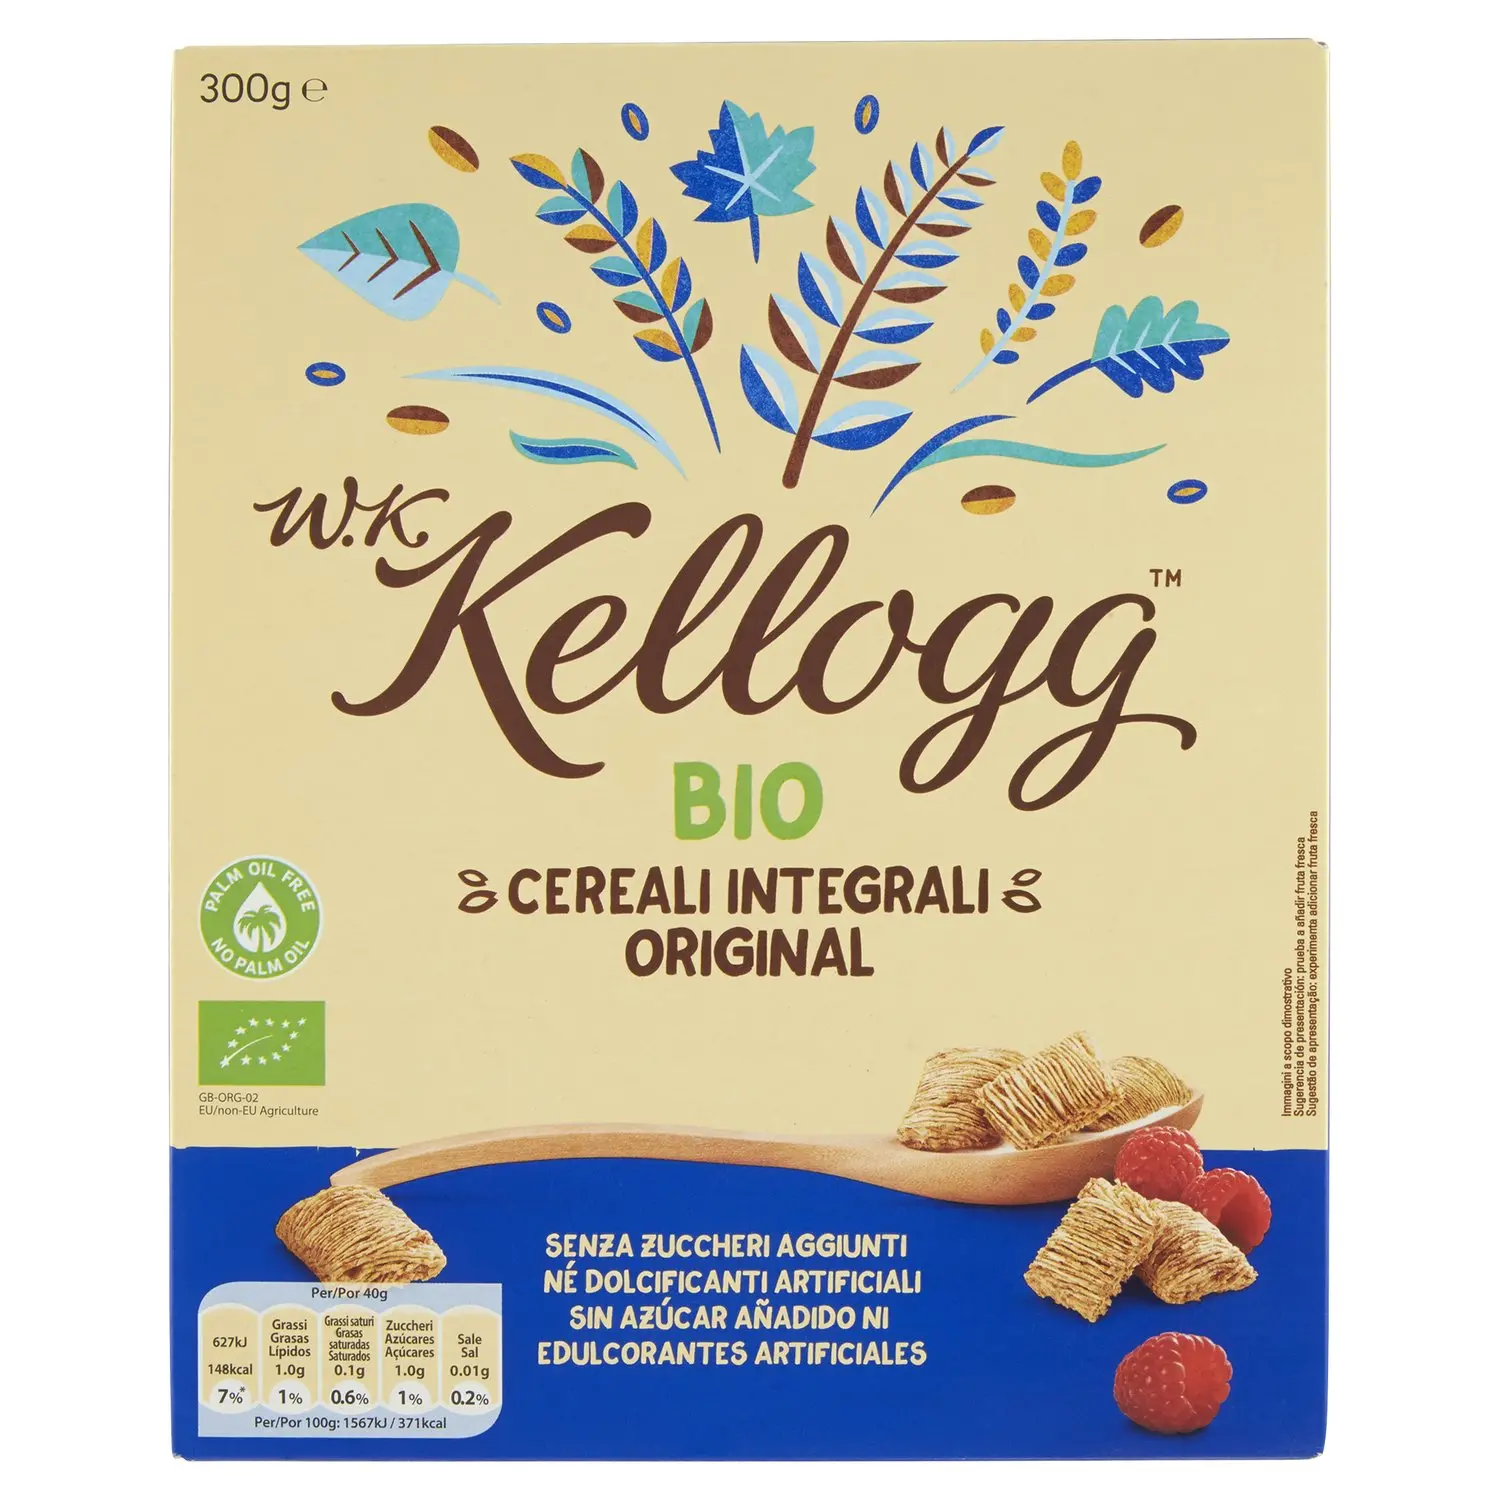 W.K Kellogg Bio Cereali Integrali Original 300 g